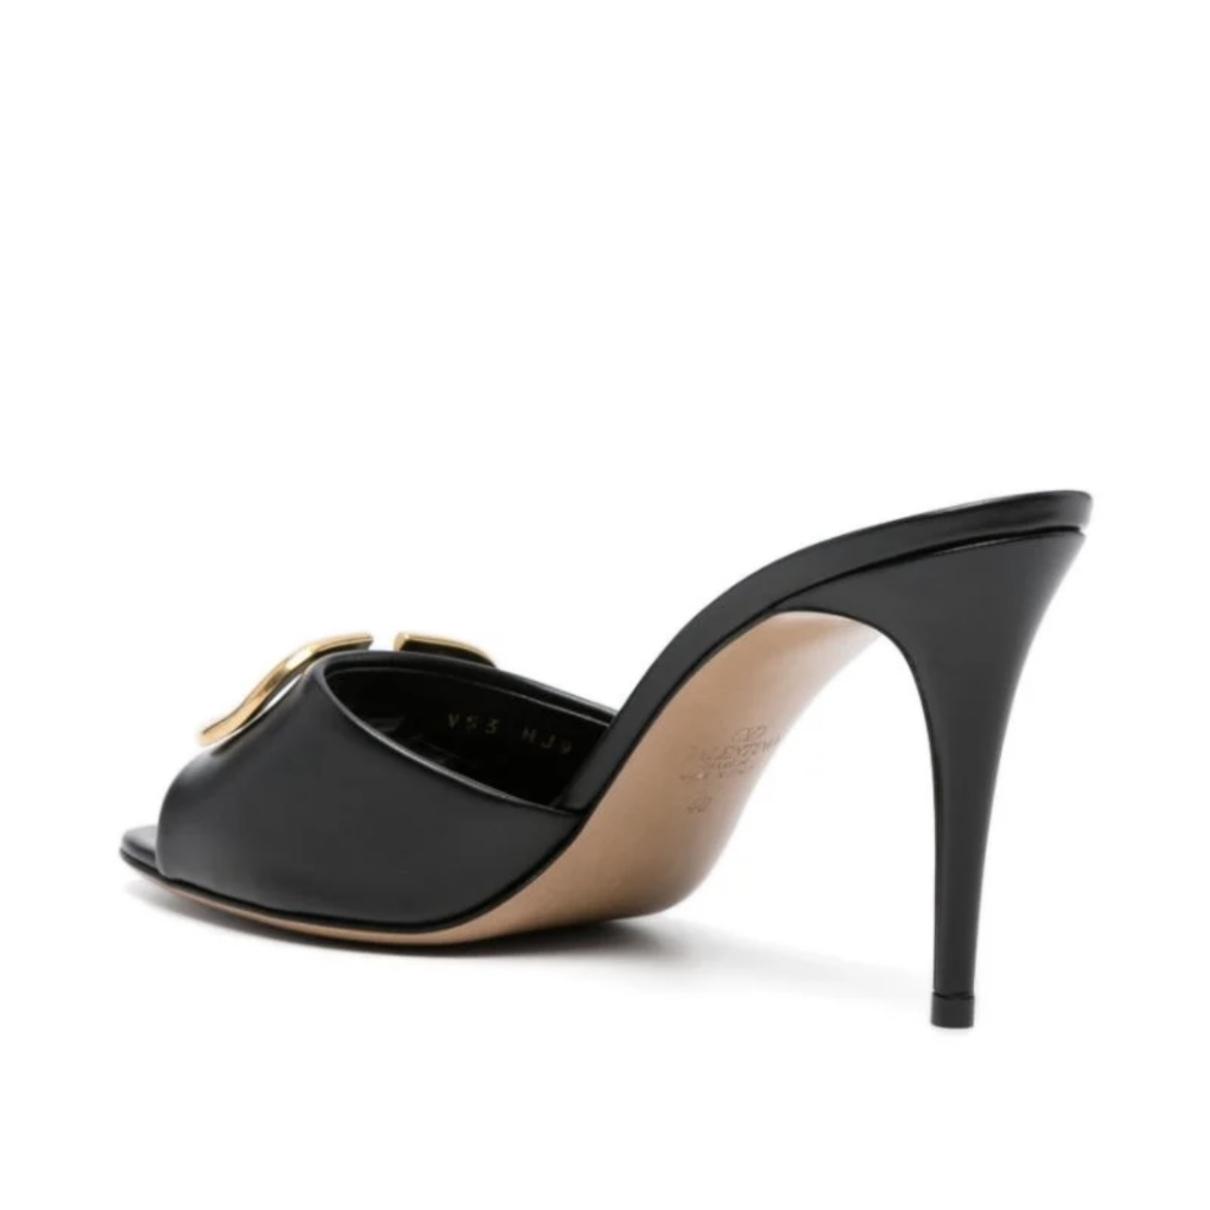 VLogo leather heels - 4